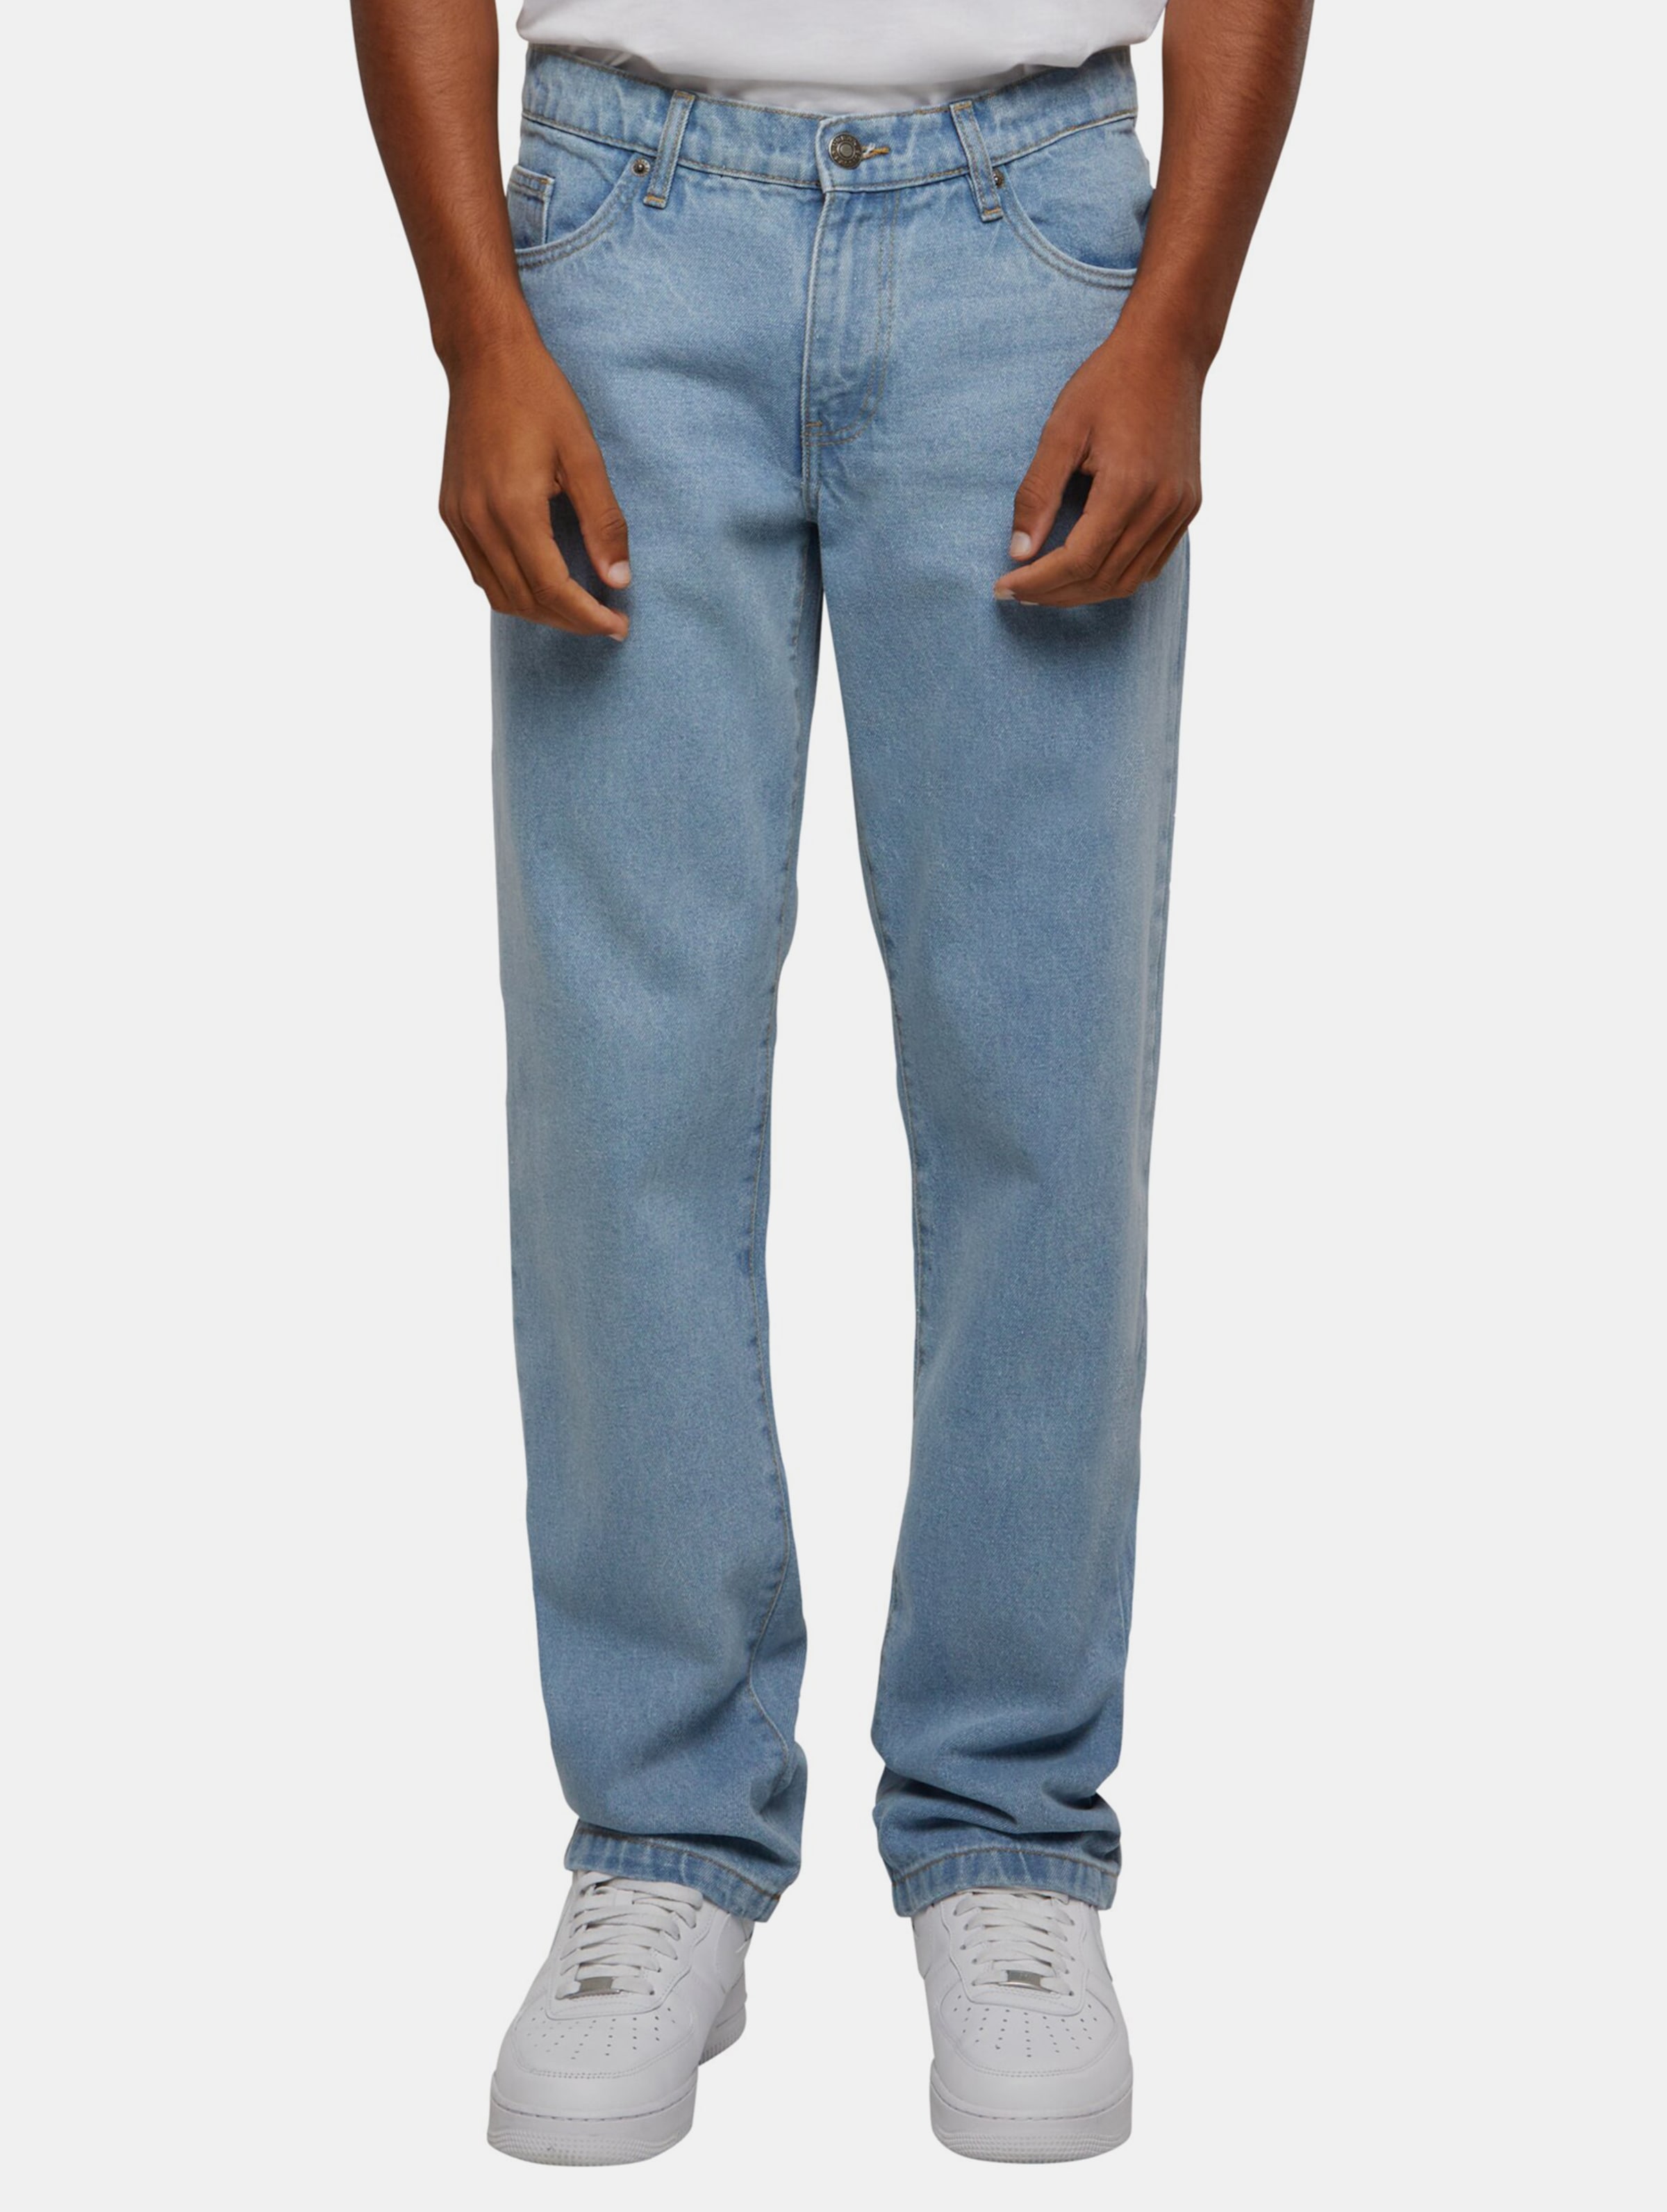 Urban Classics - Heavy Ounce Straight Fit Jeans Broek rechte pijpen - Taille, 30 inch - Blauw